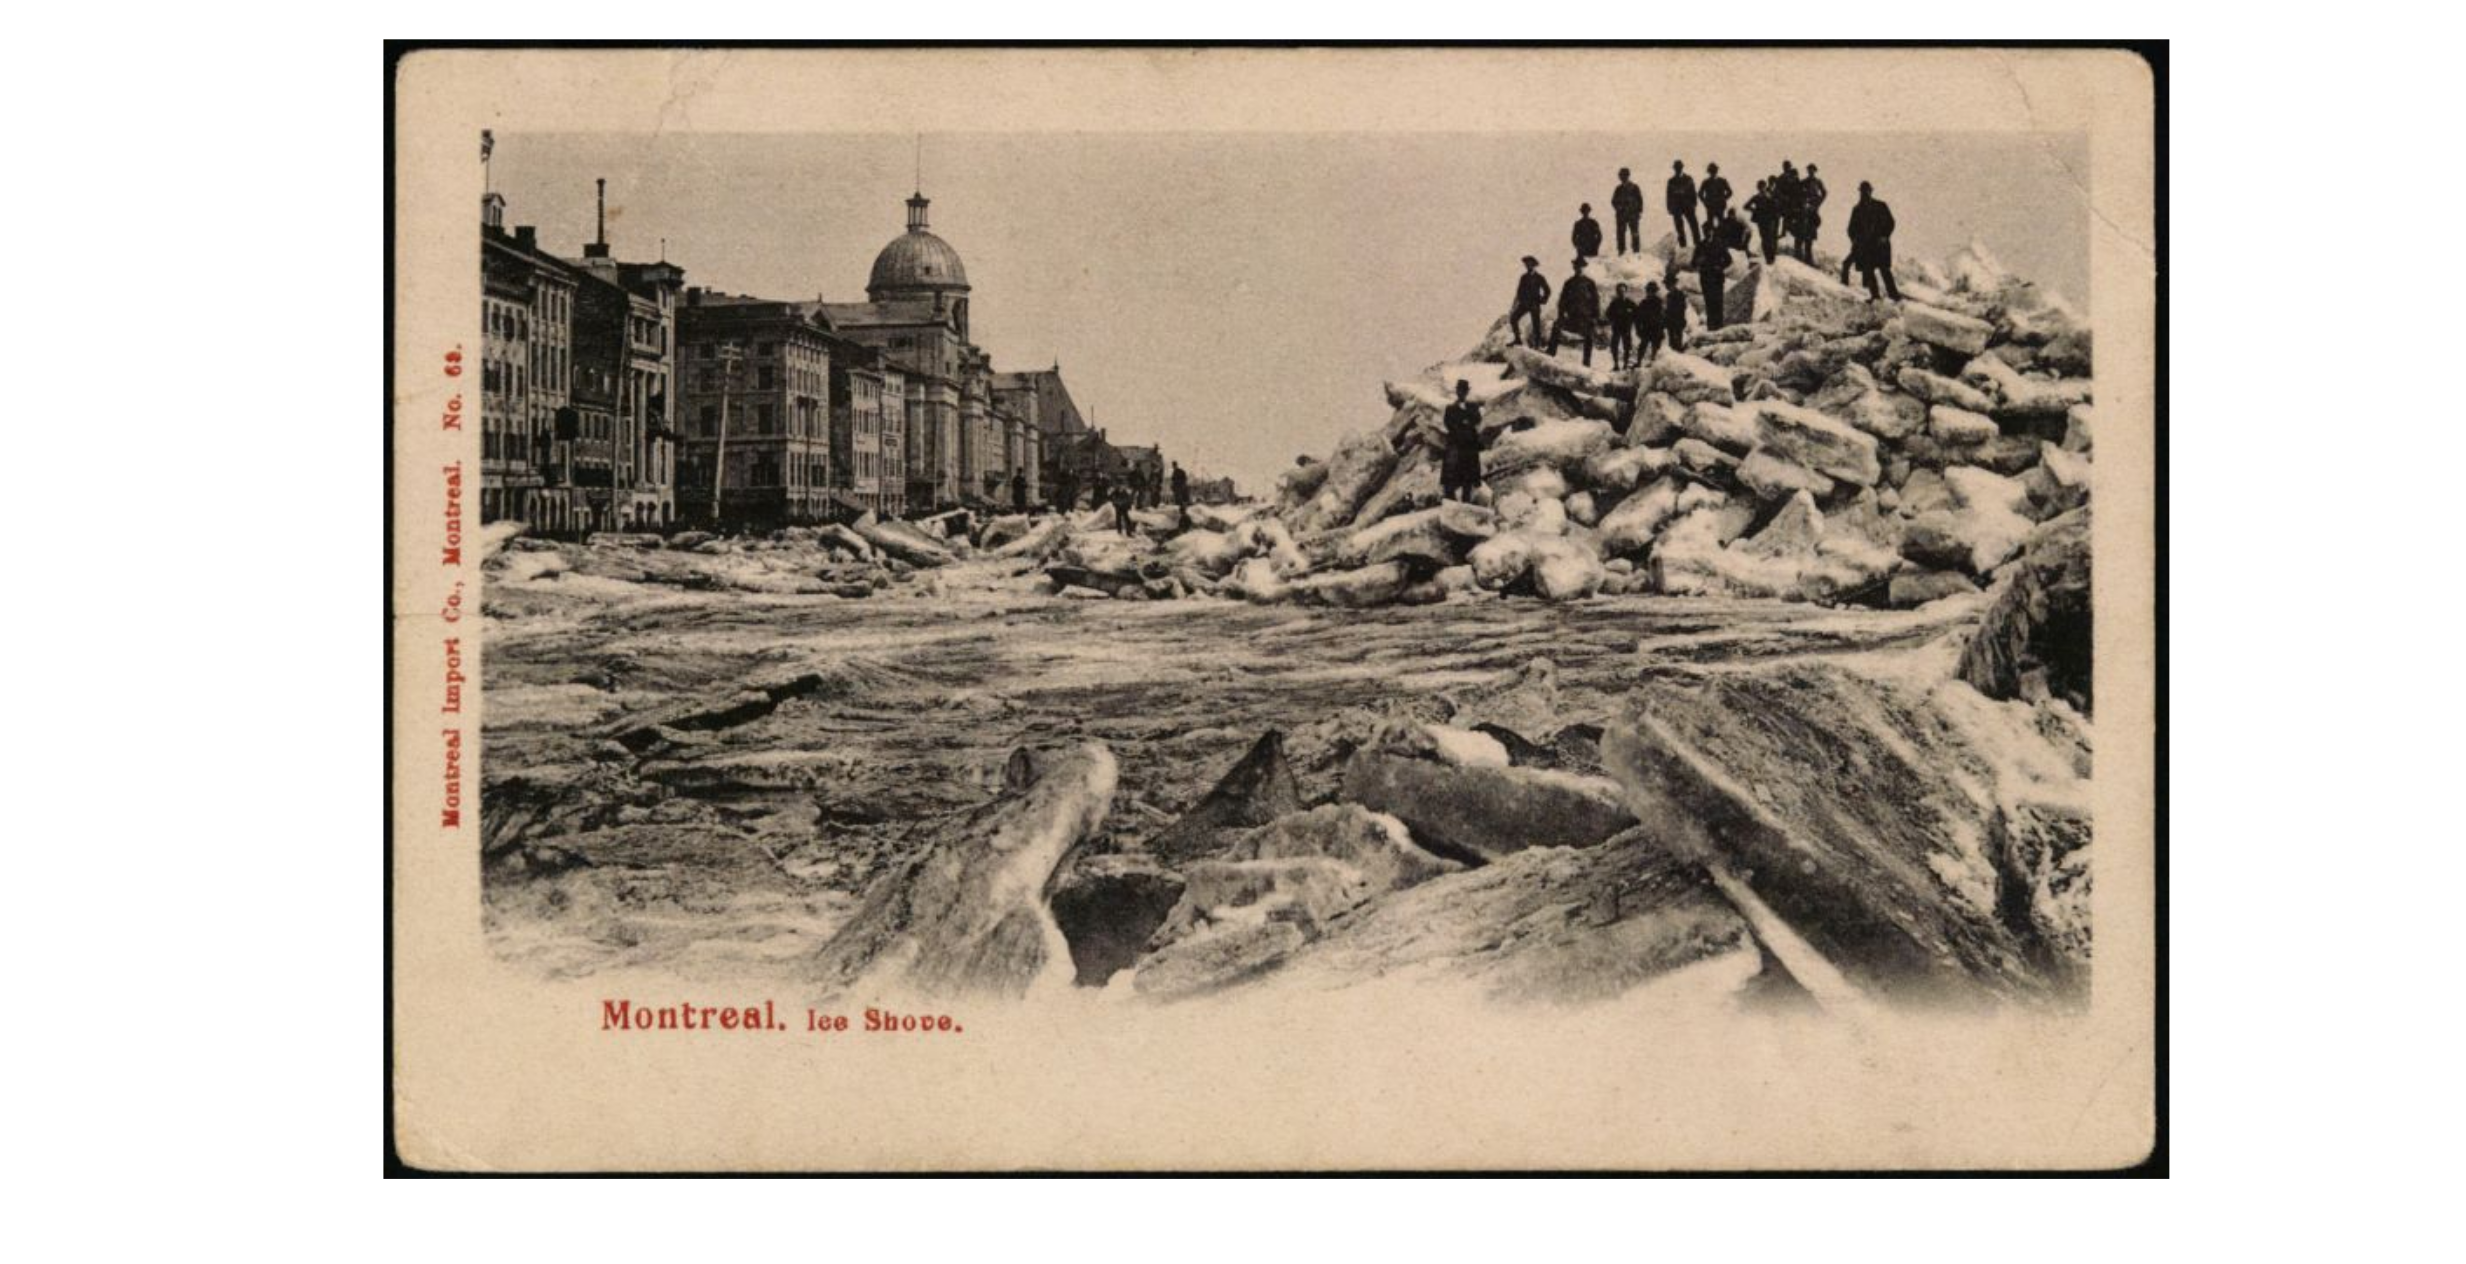 Notman’s Ice Shove photograph printed on a Montreal postcard.